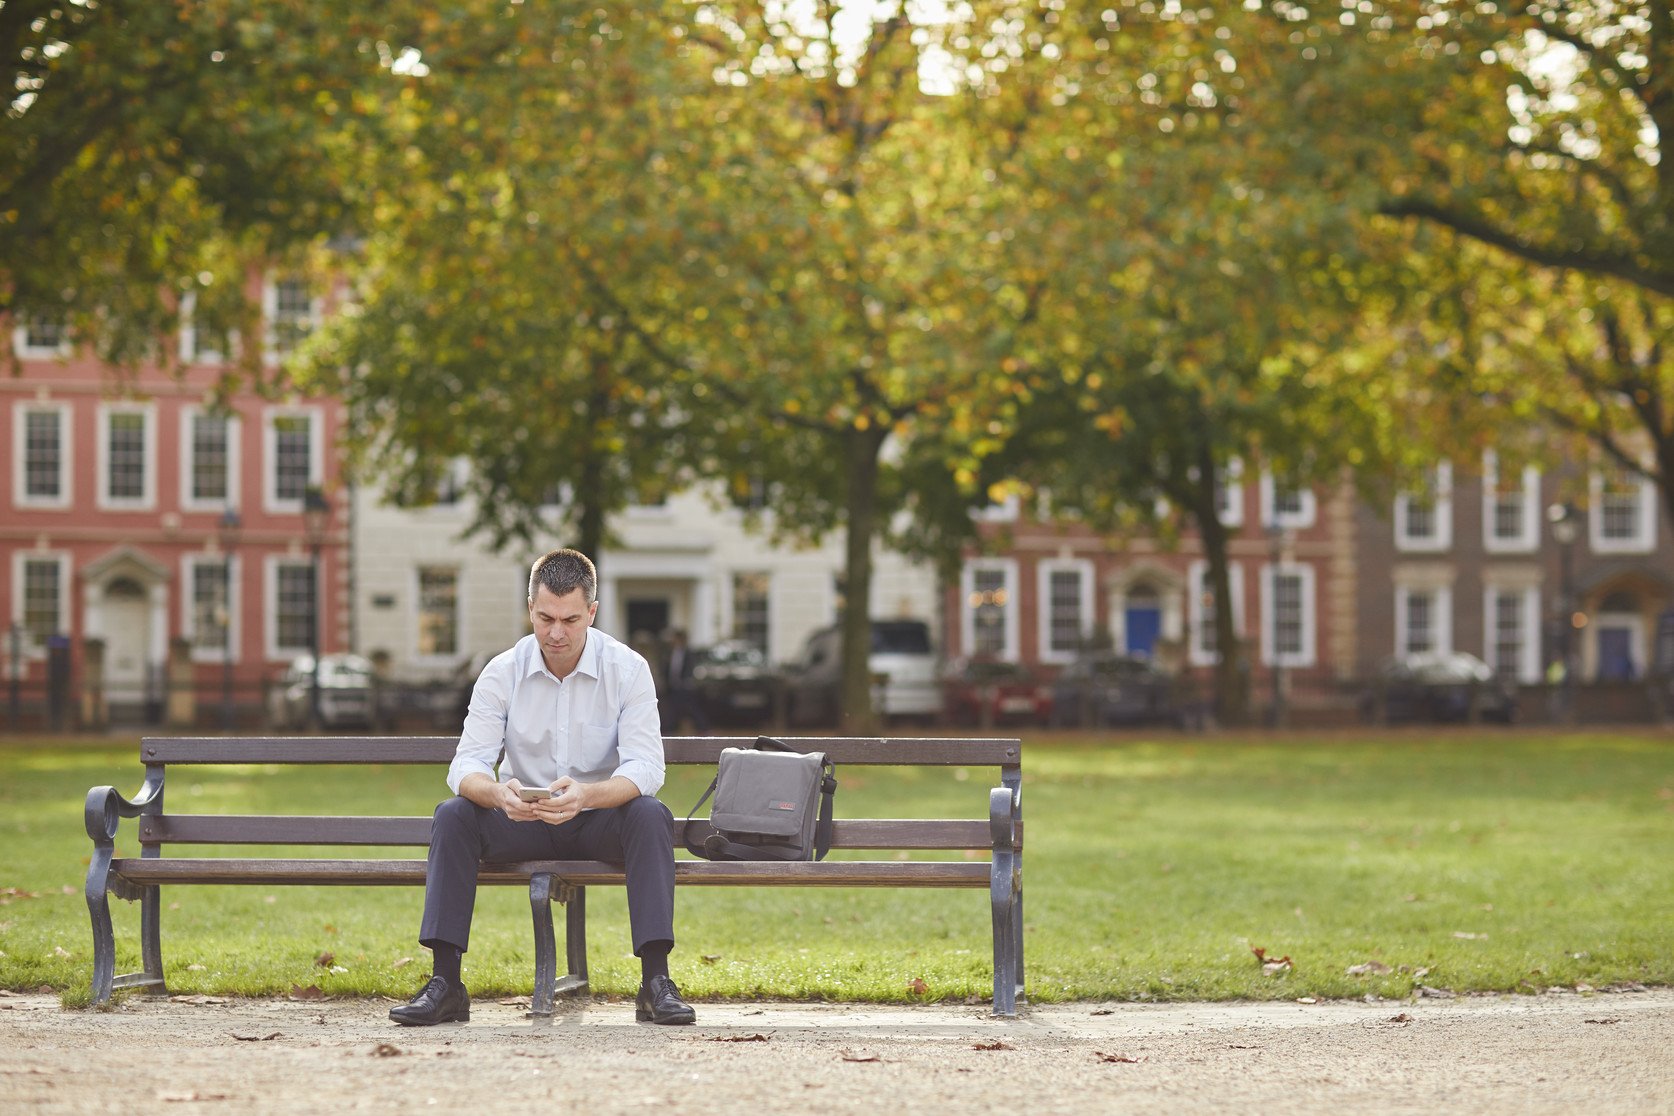 Man sitting on park bench